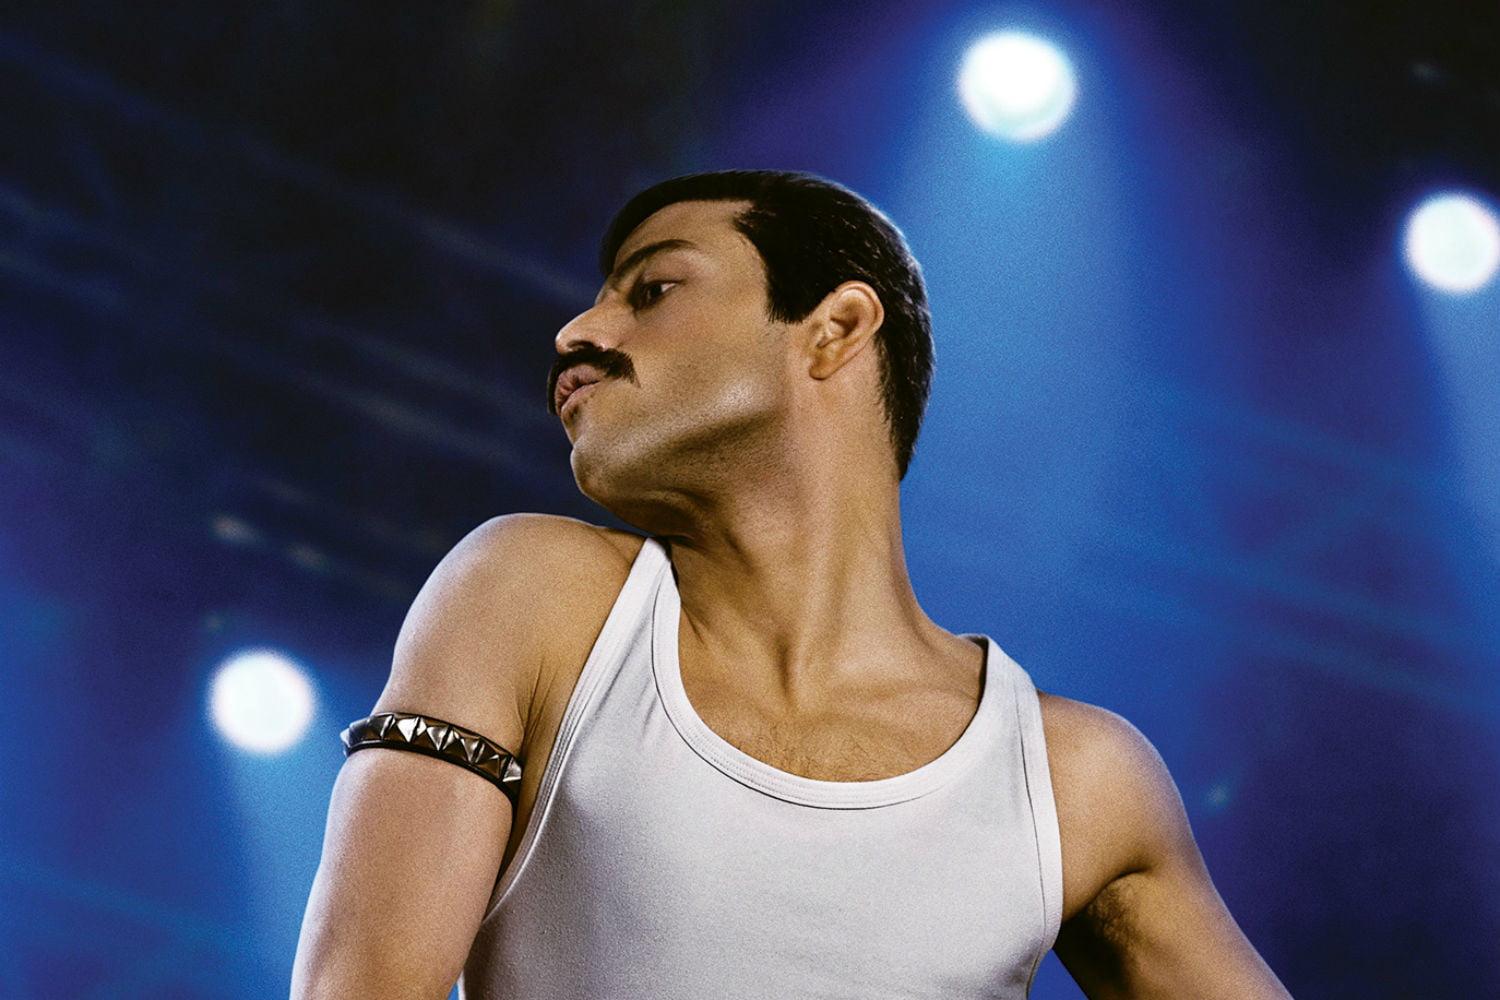 Rami Malek som Freddie Mercury i ”Bohemian rhapsody”.